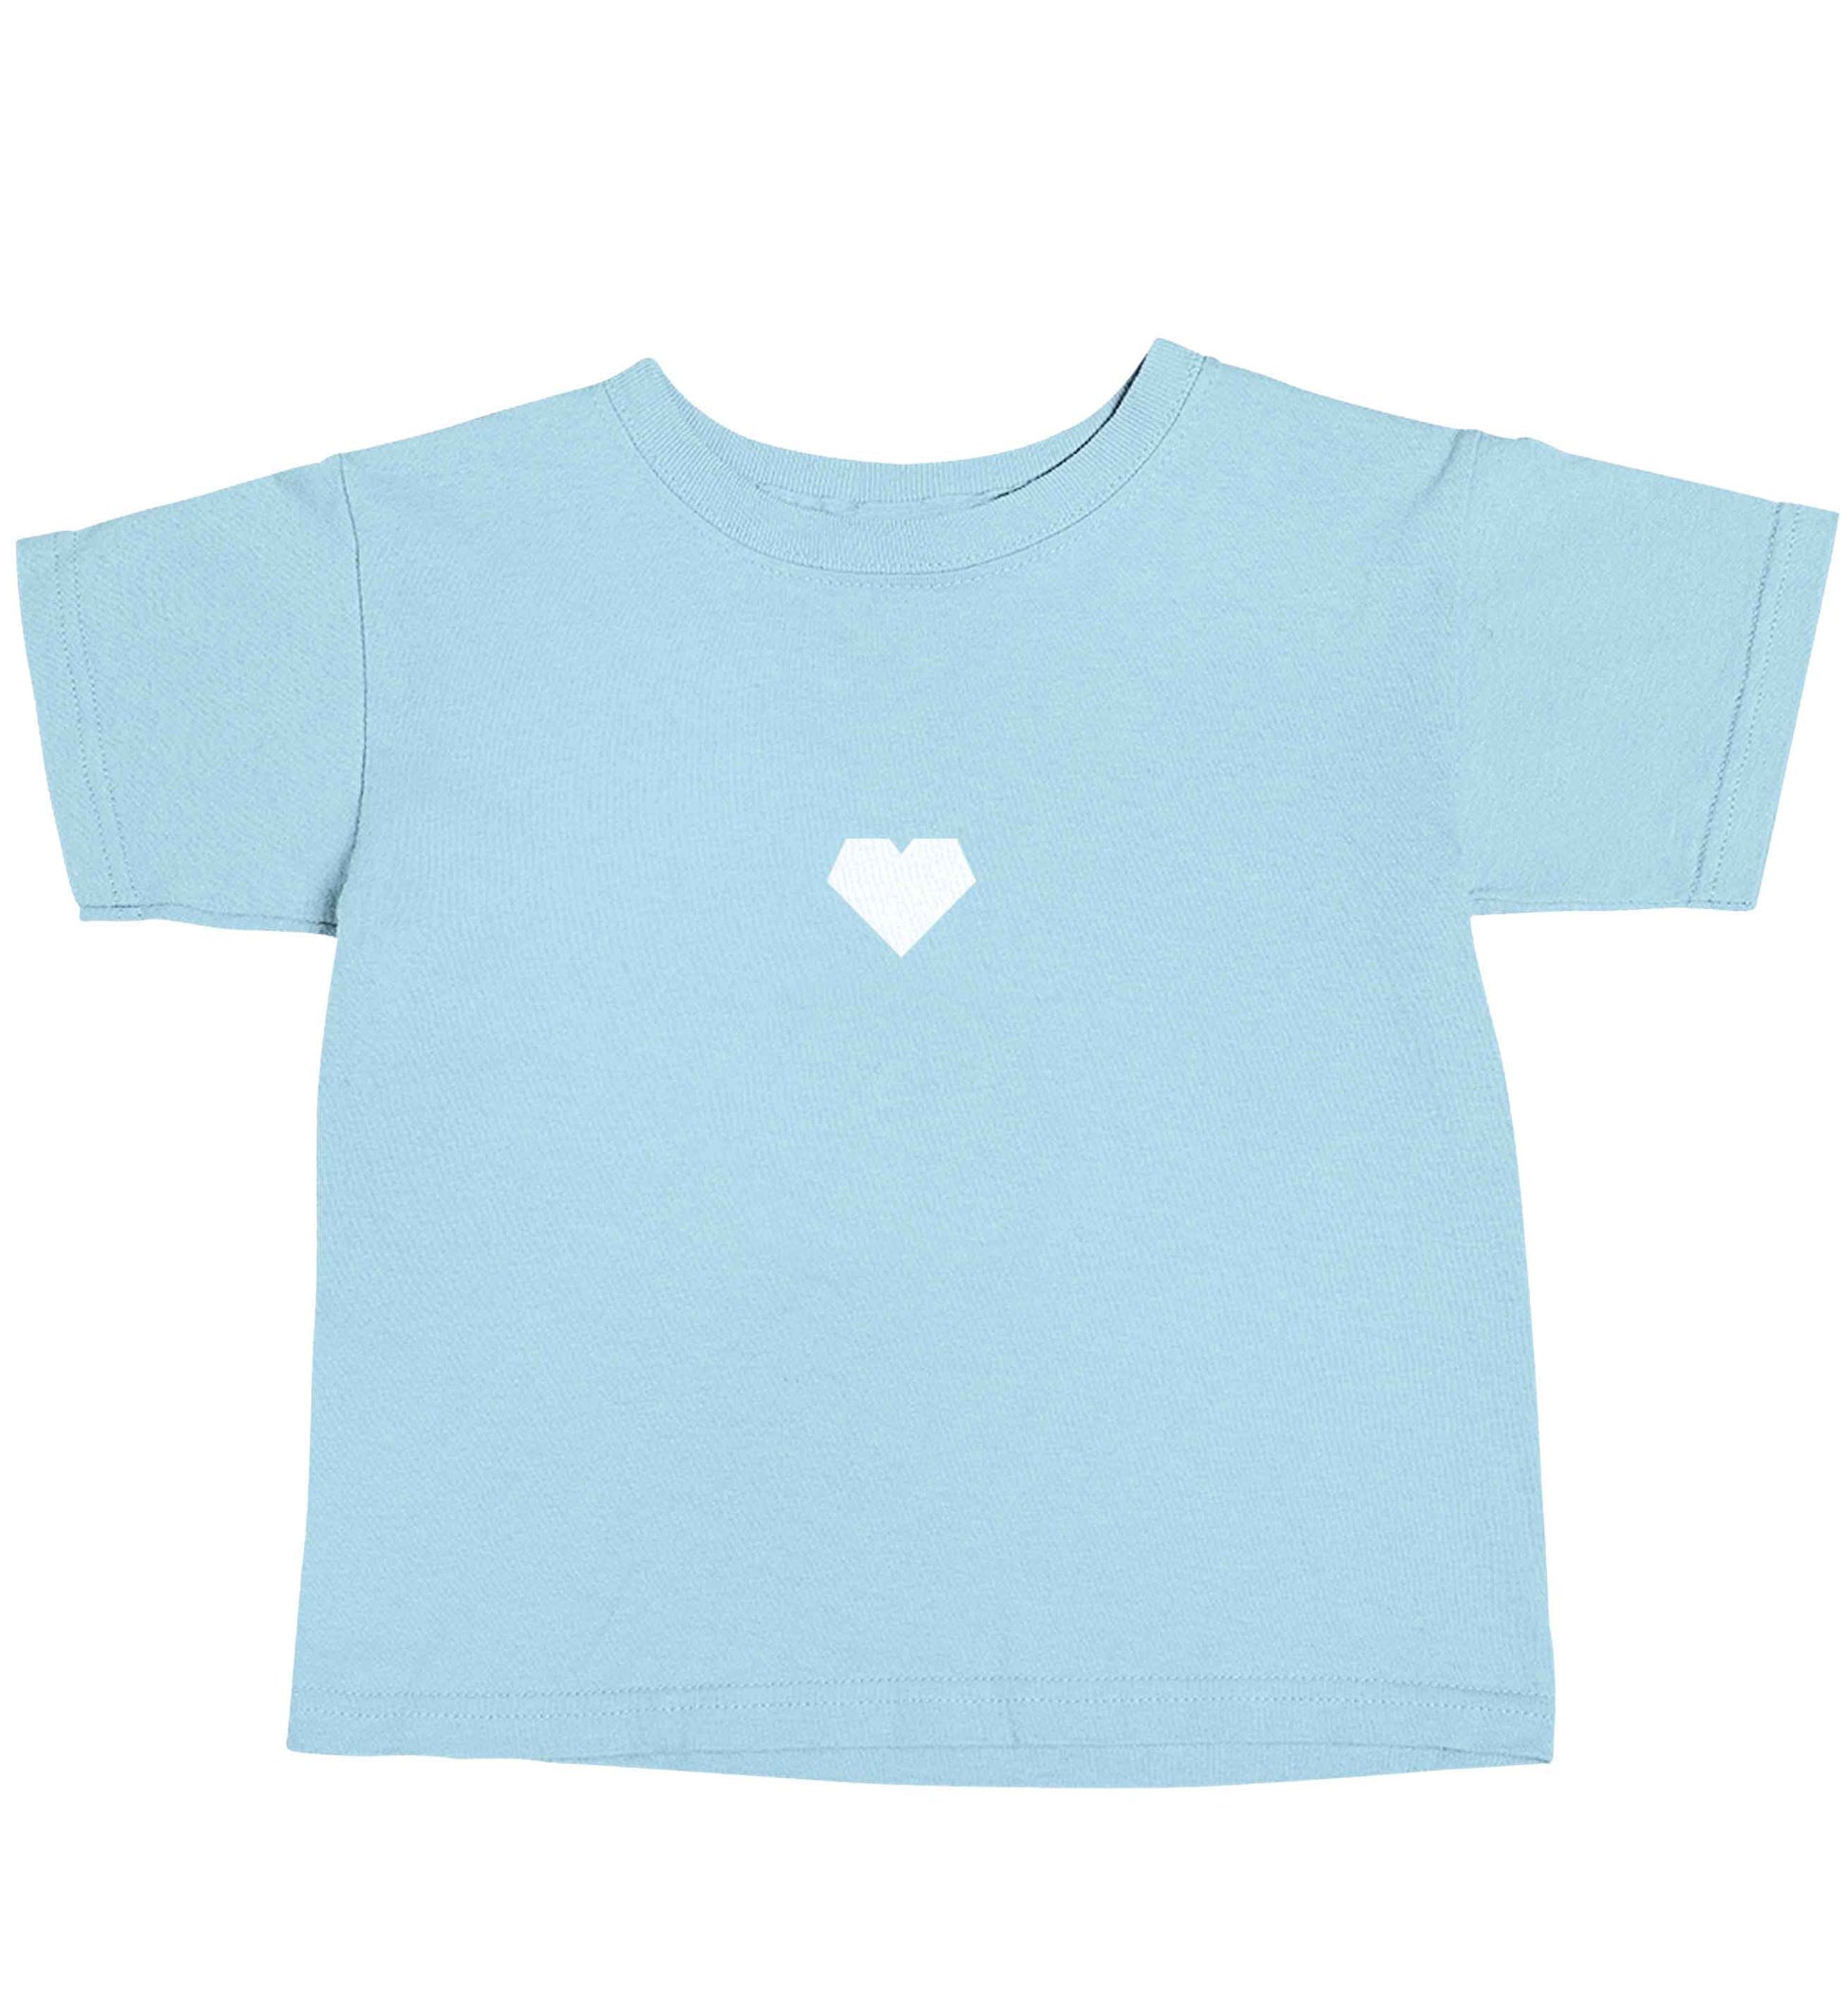 Tiny heart light blue baby toddler Tshirt 2 Years